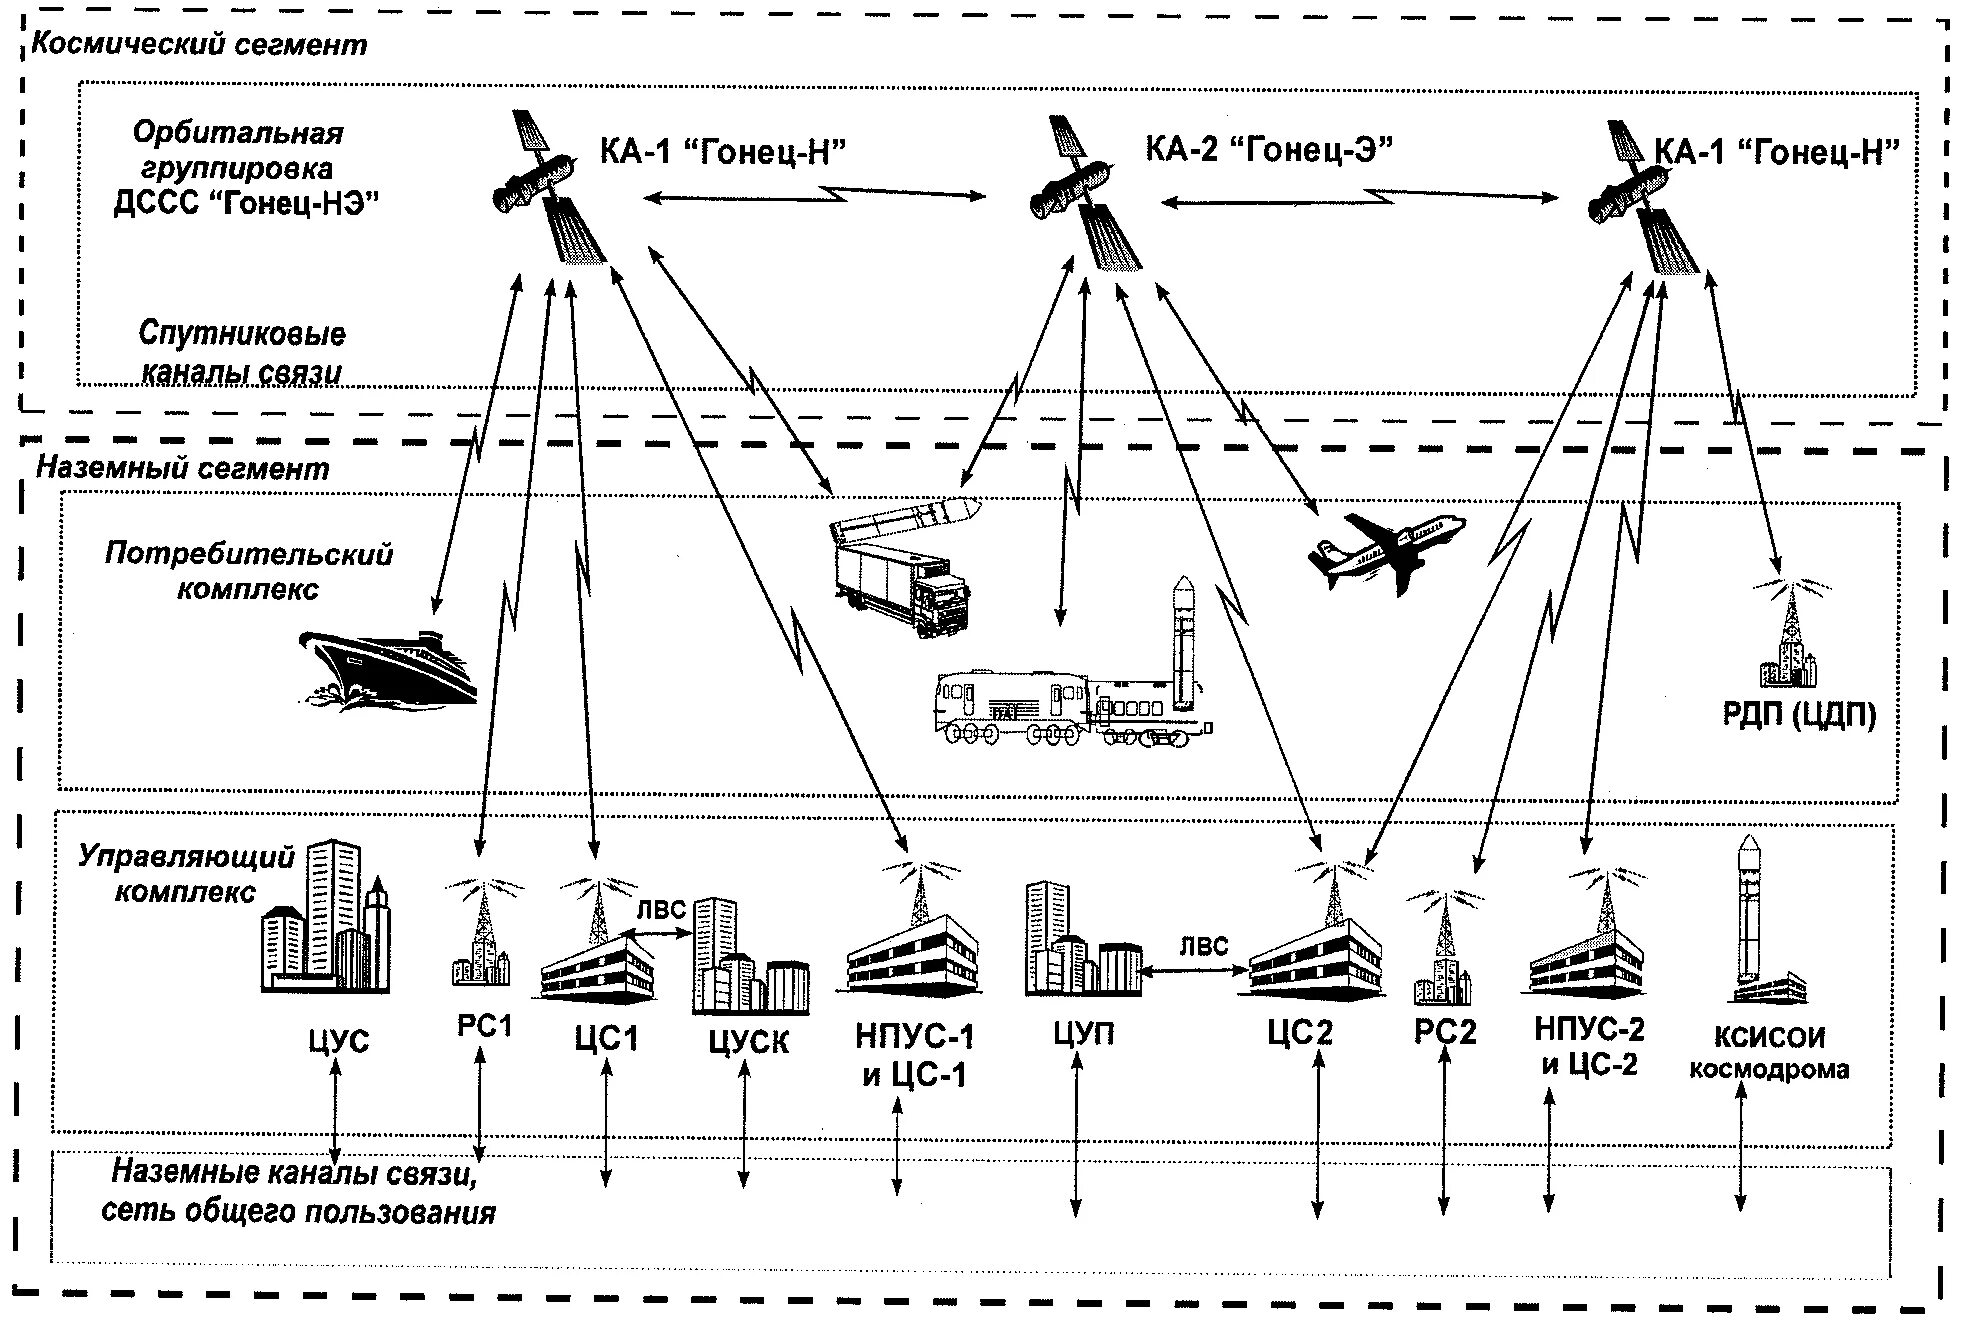 Анализ организации связи. Структурная схема радиолинии спутниковой связи. Схема связи абонентов по линиям специальной связи «01». Ретранслятор система спутниковой связи. Схема построения систем спутниковой связи.